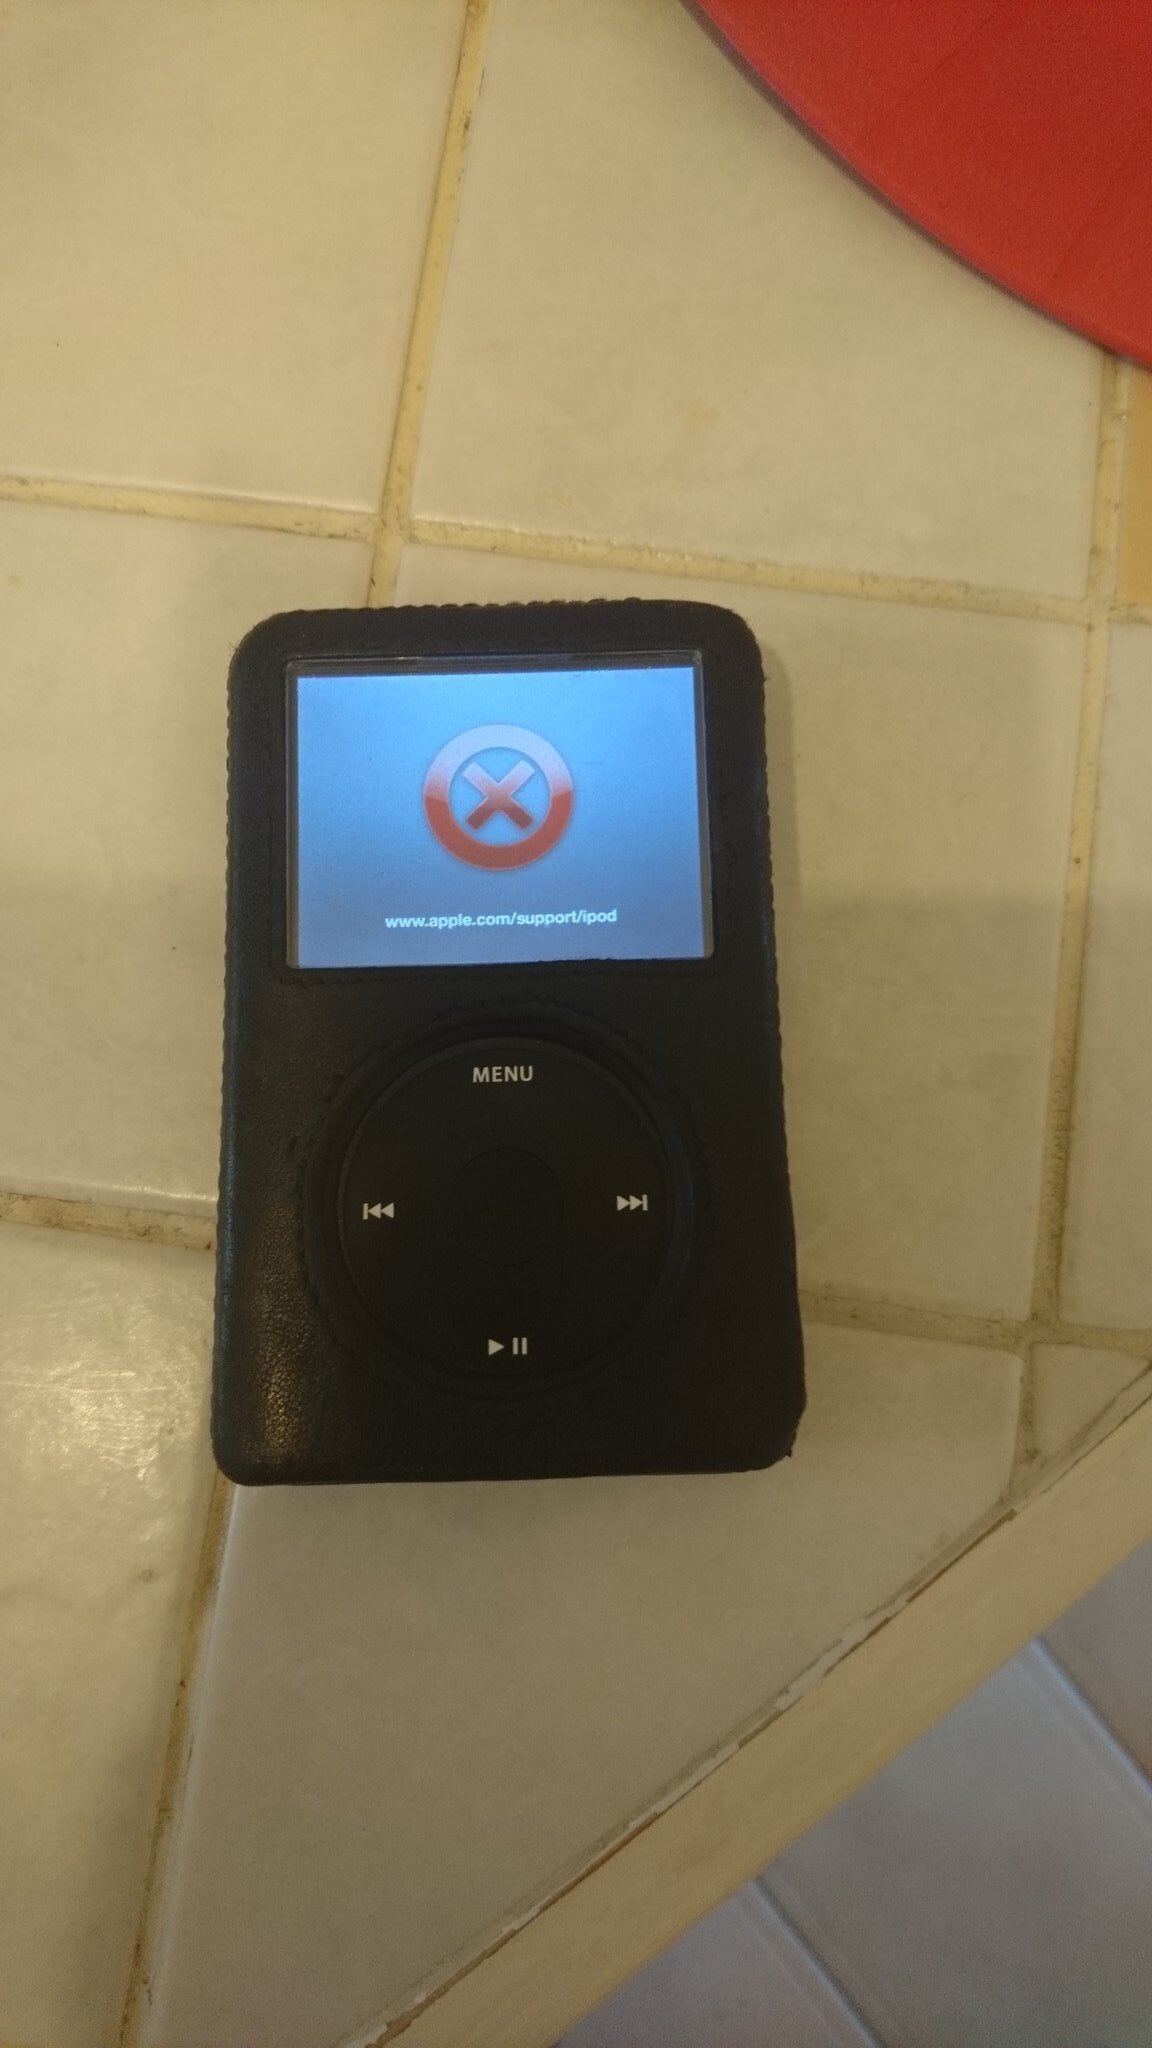 Dead iPod Classic